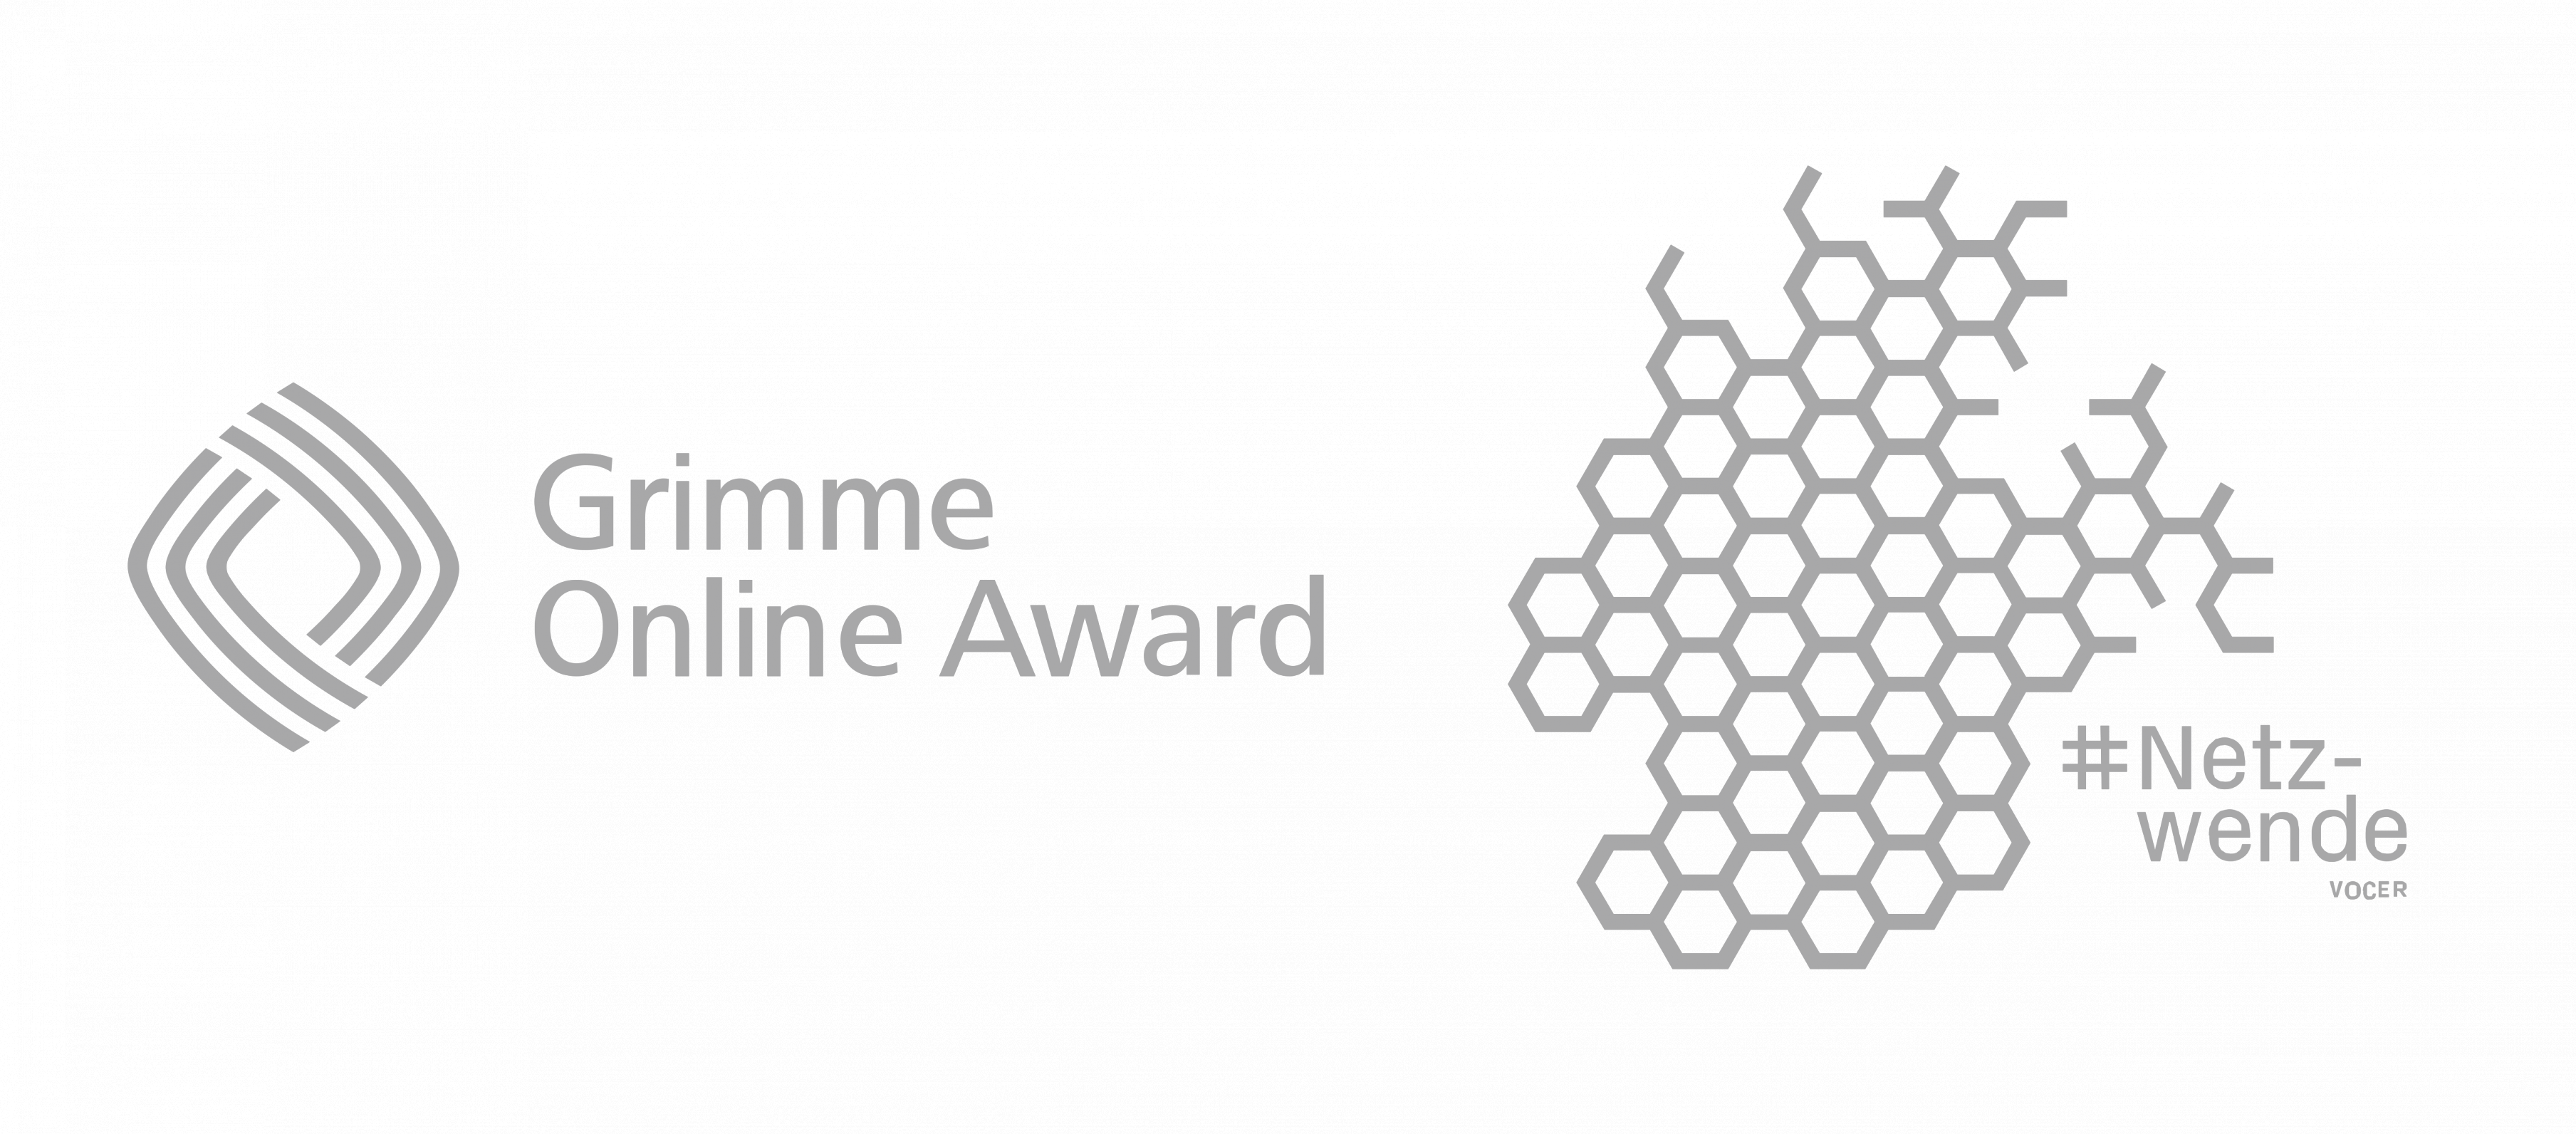 Logos: Grimme Online Award 2018 & VOCER #NETZWENDE-Award 2017